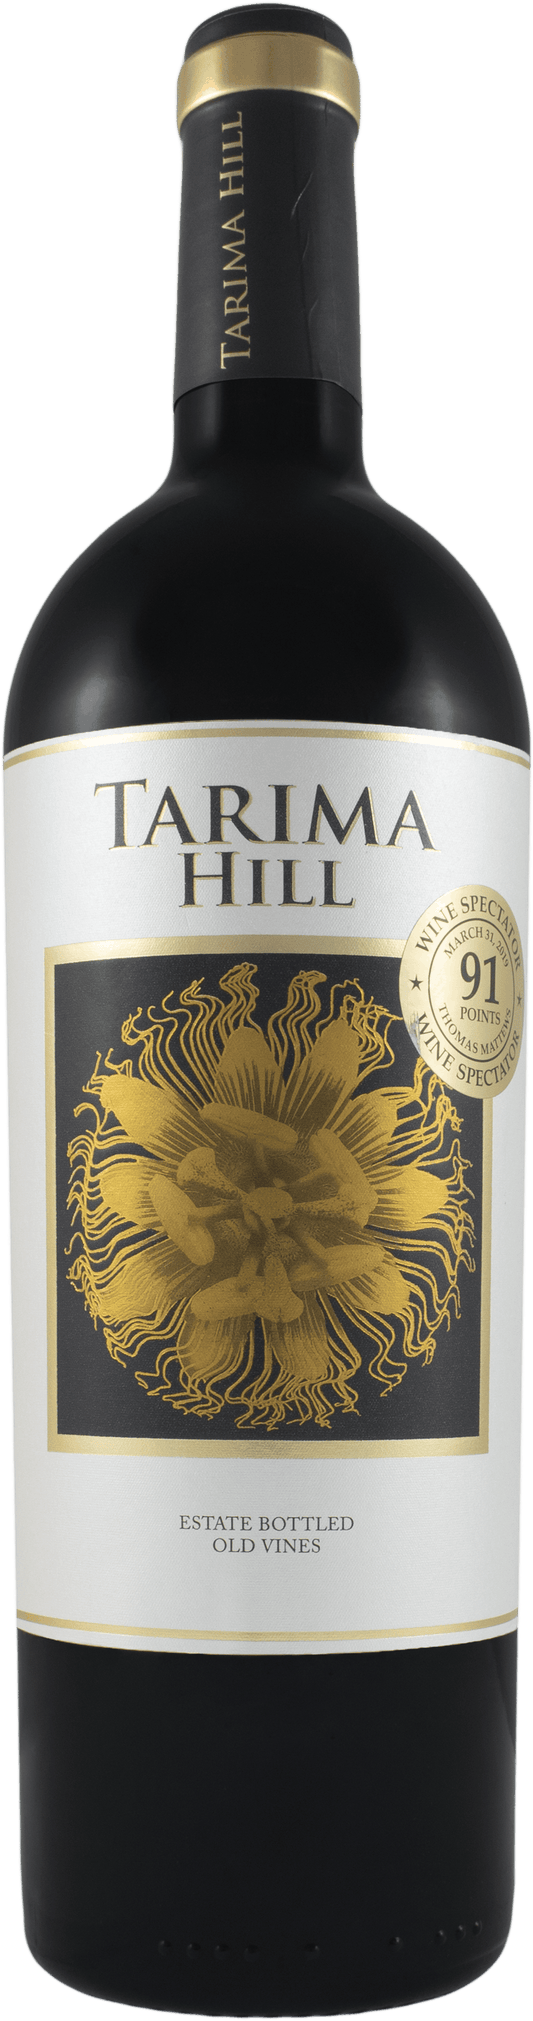 Volver, Tarima Hill Monastrell Old Vines 2019 (1x75cl) - TwoMoreGlasses.com